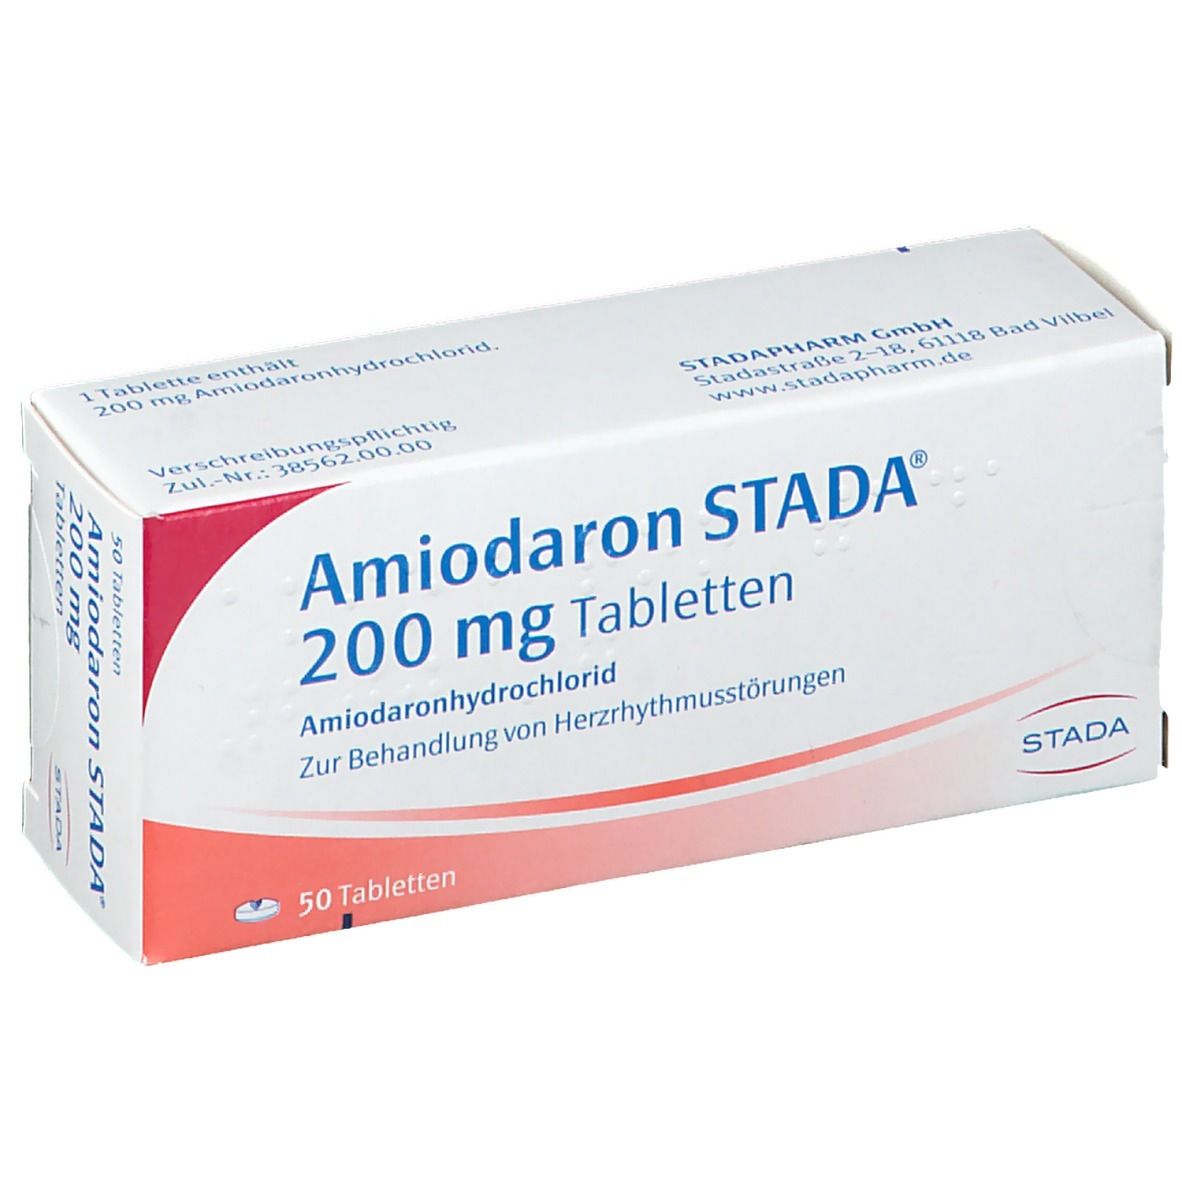 Amiodaron STADA® 200 mg